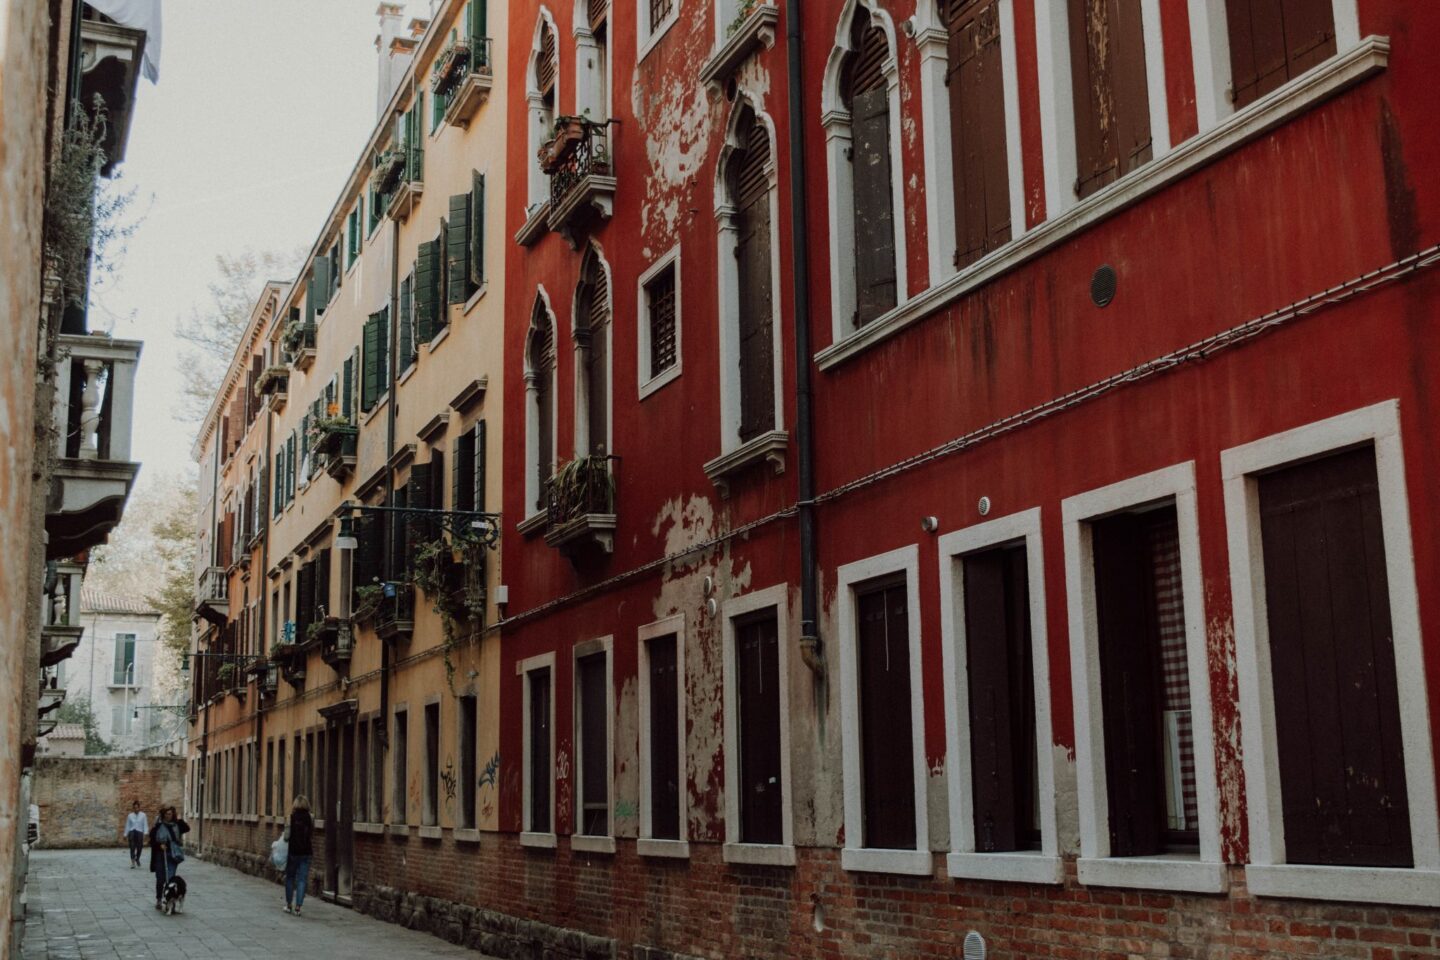 Benefits of Travel, Venice Italy, Travel